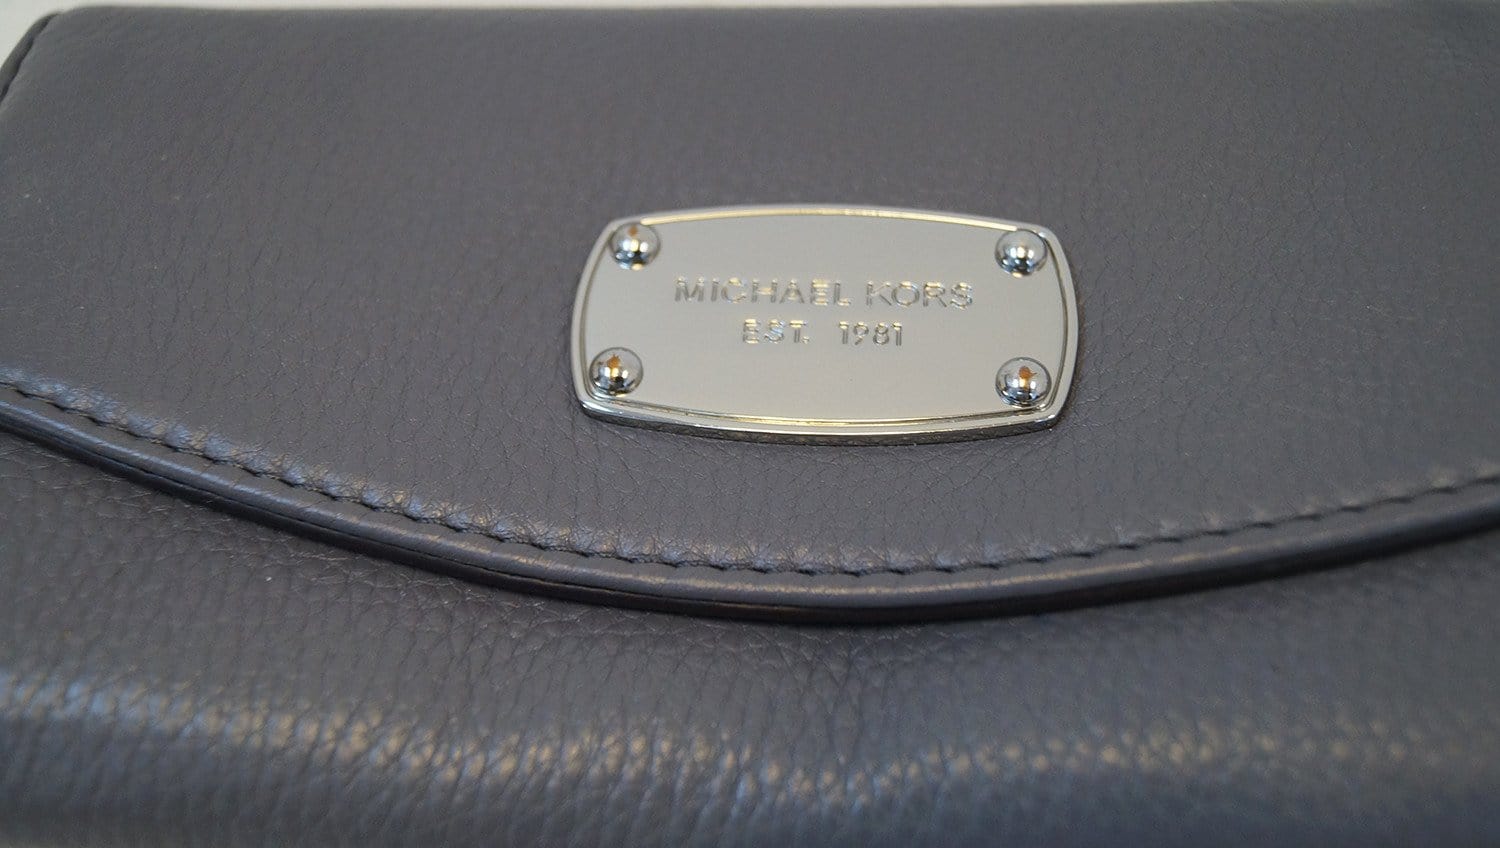 Michael Kors Jet Set Women's Luggage Wallet